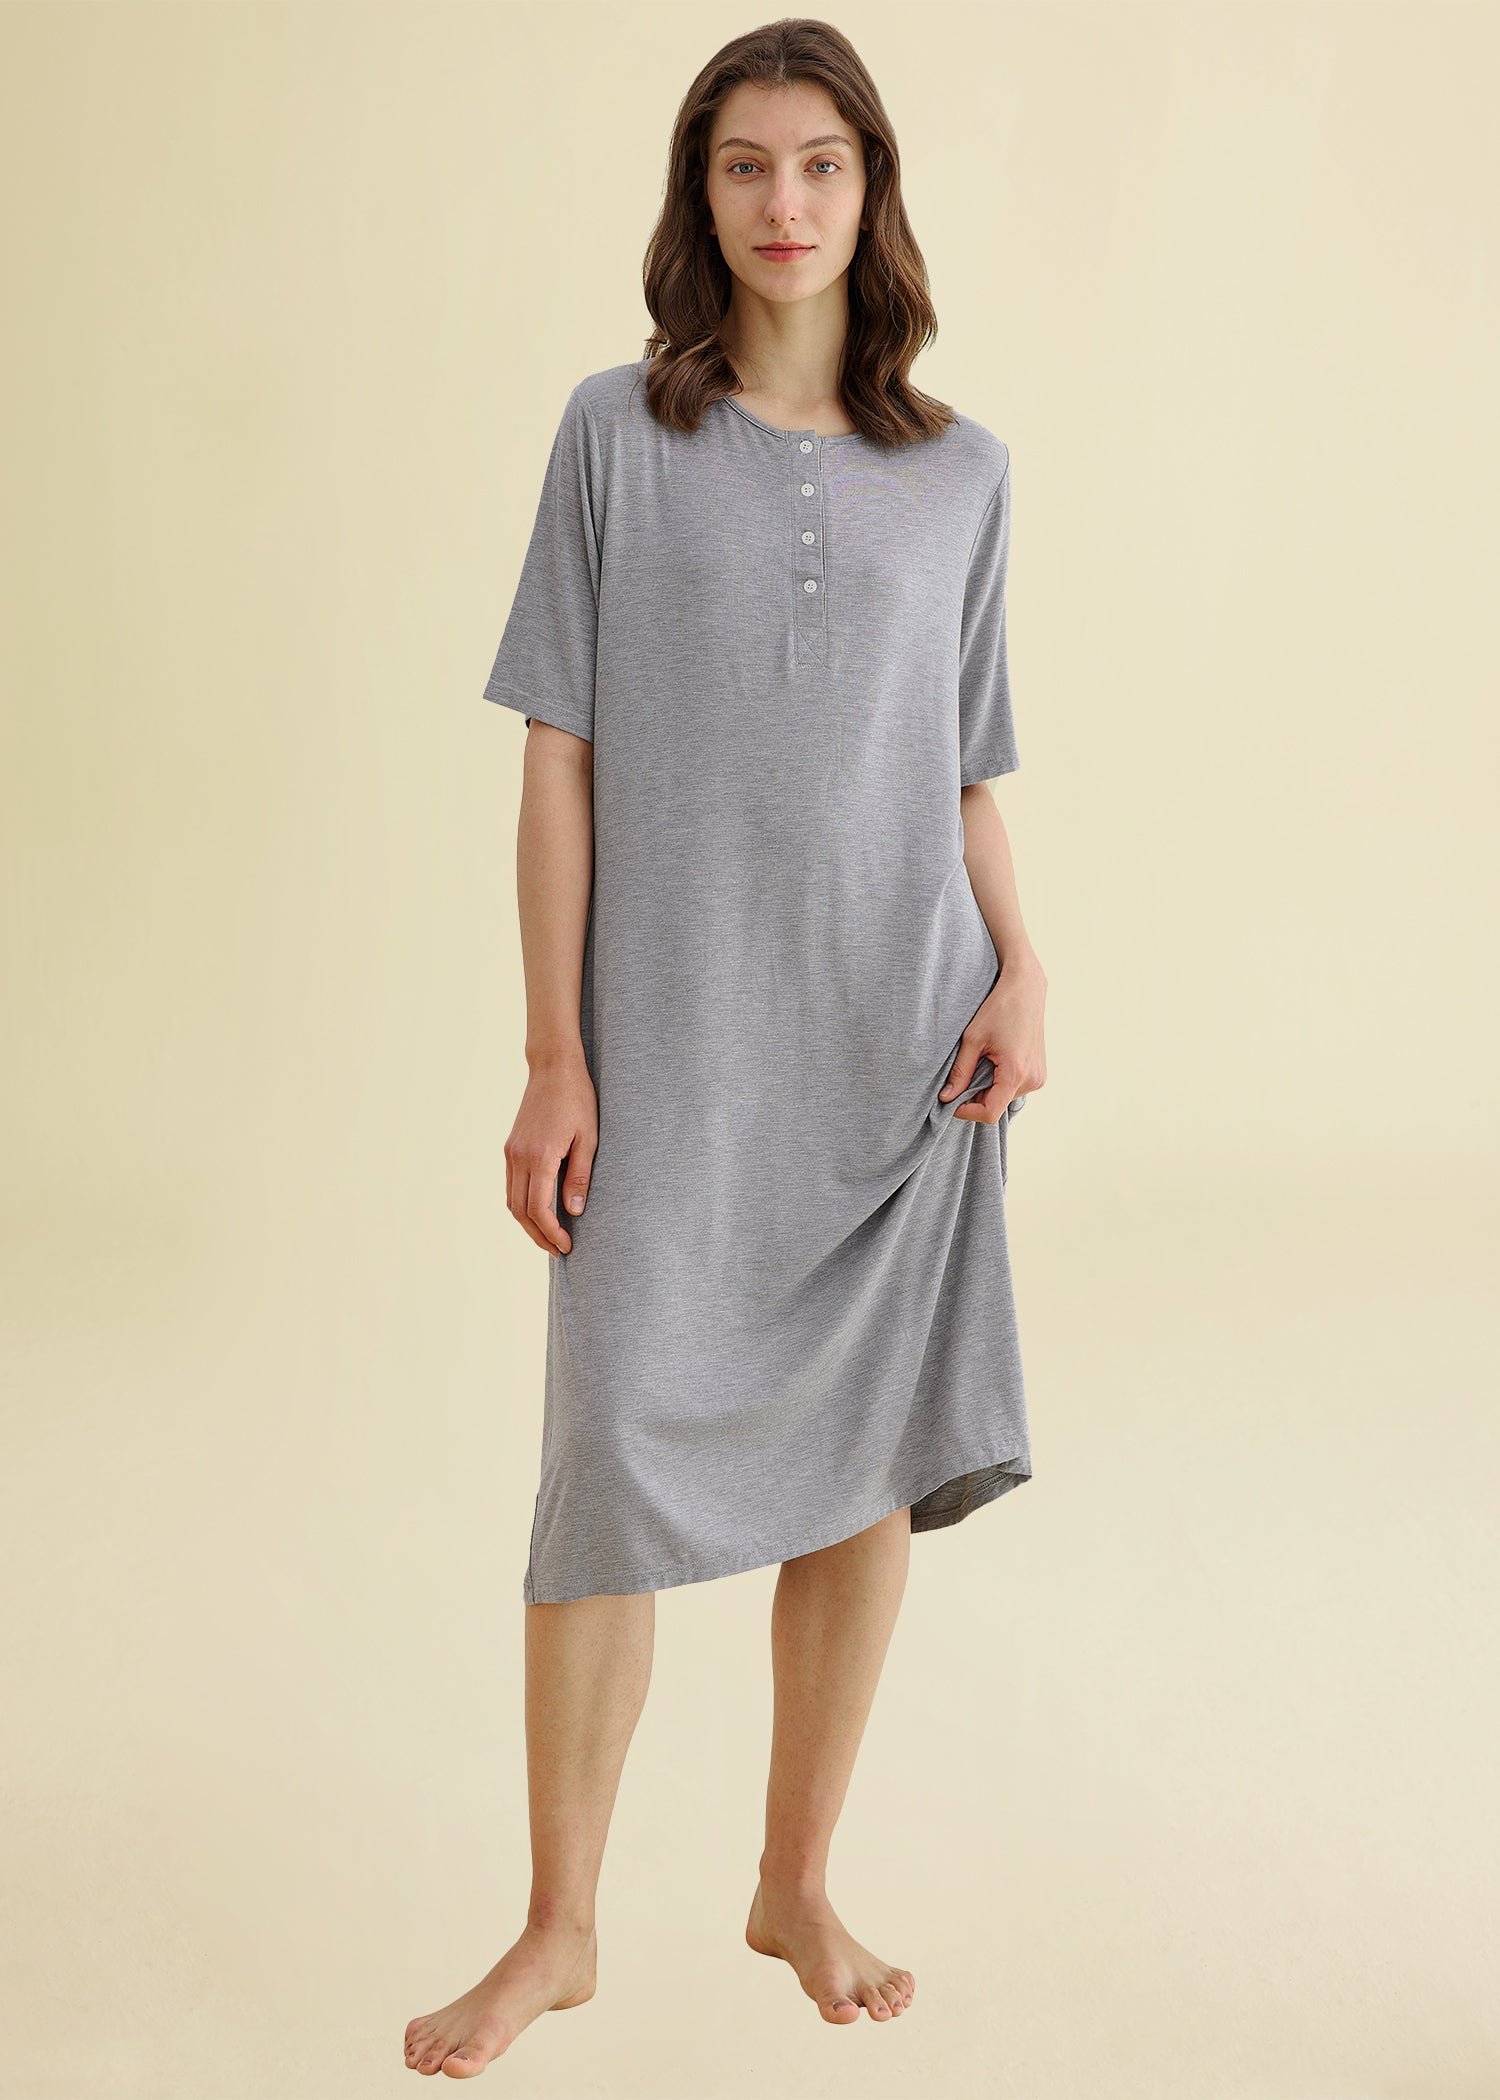 Women's Long Sleep Shirt Henley Nightshirt with Pockets – Latuza